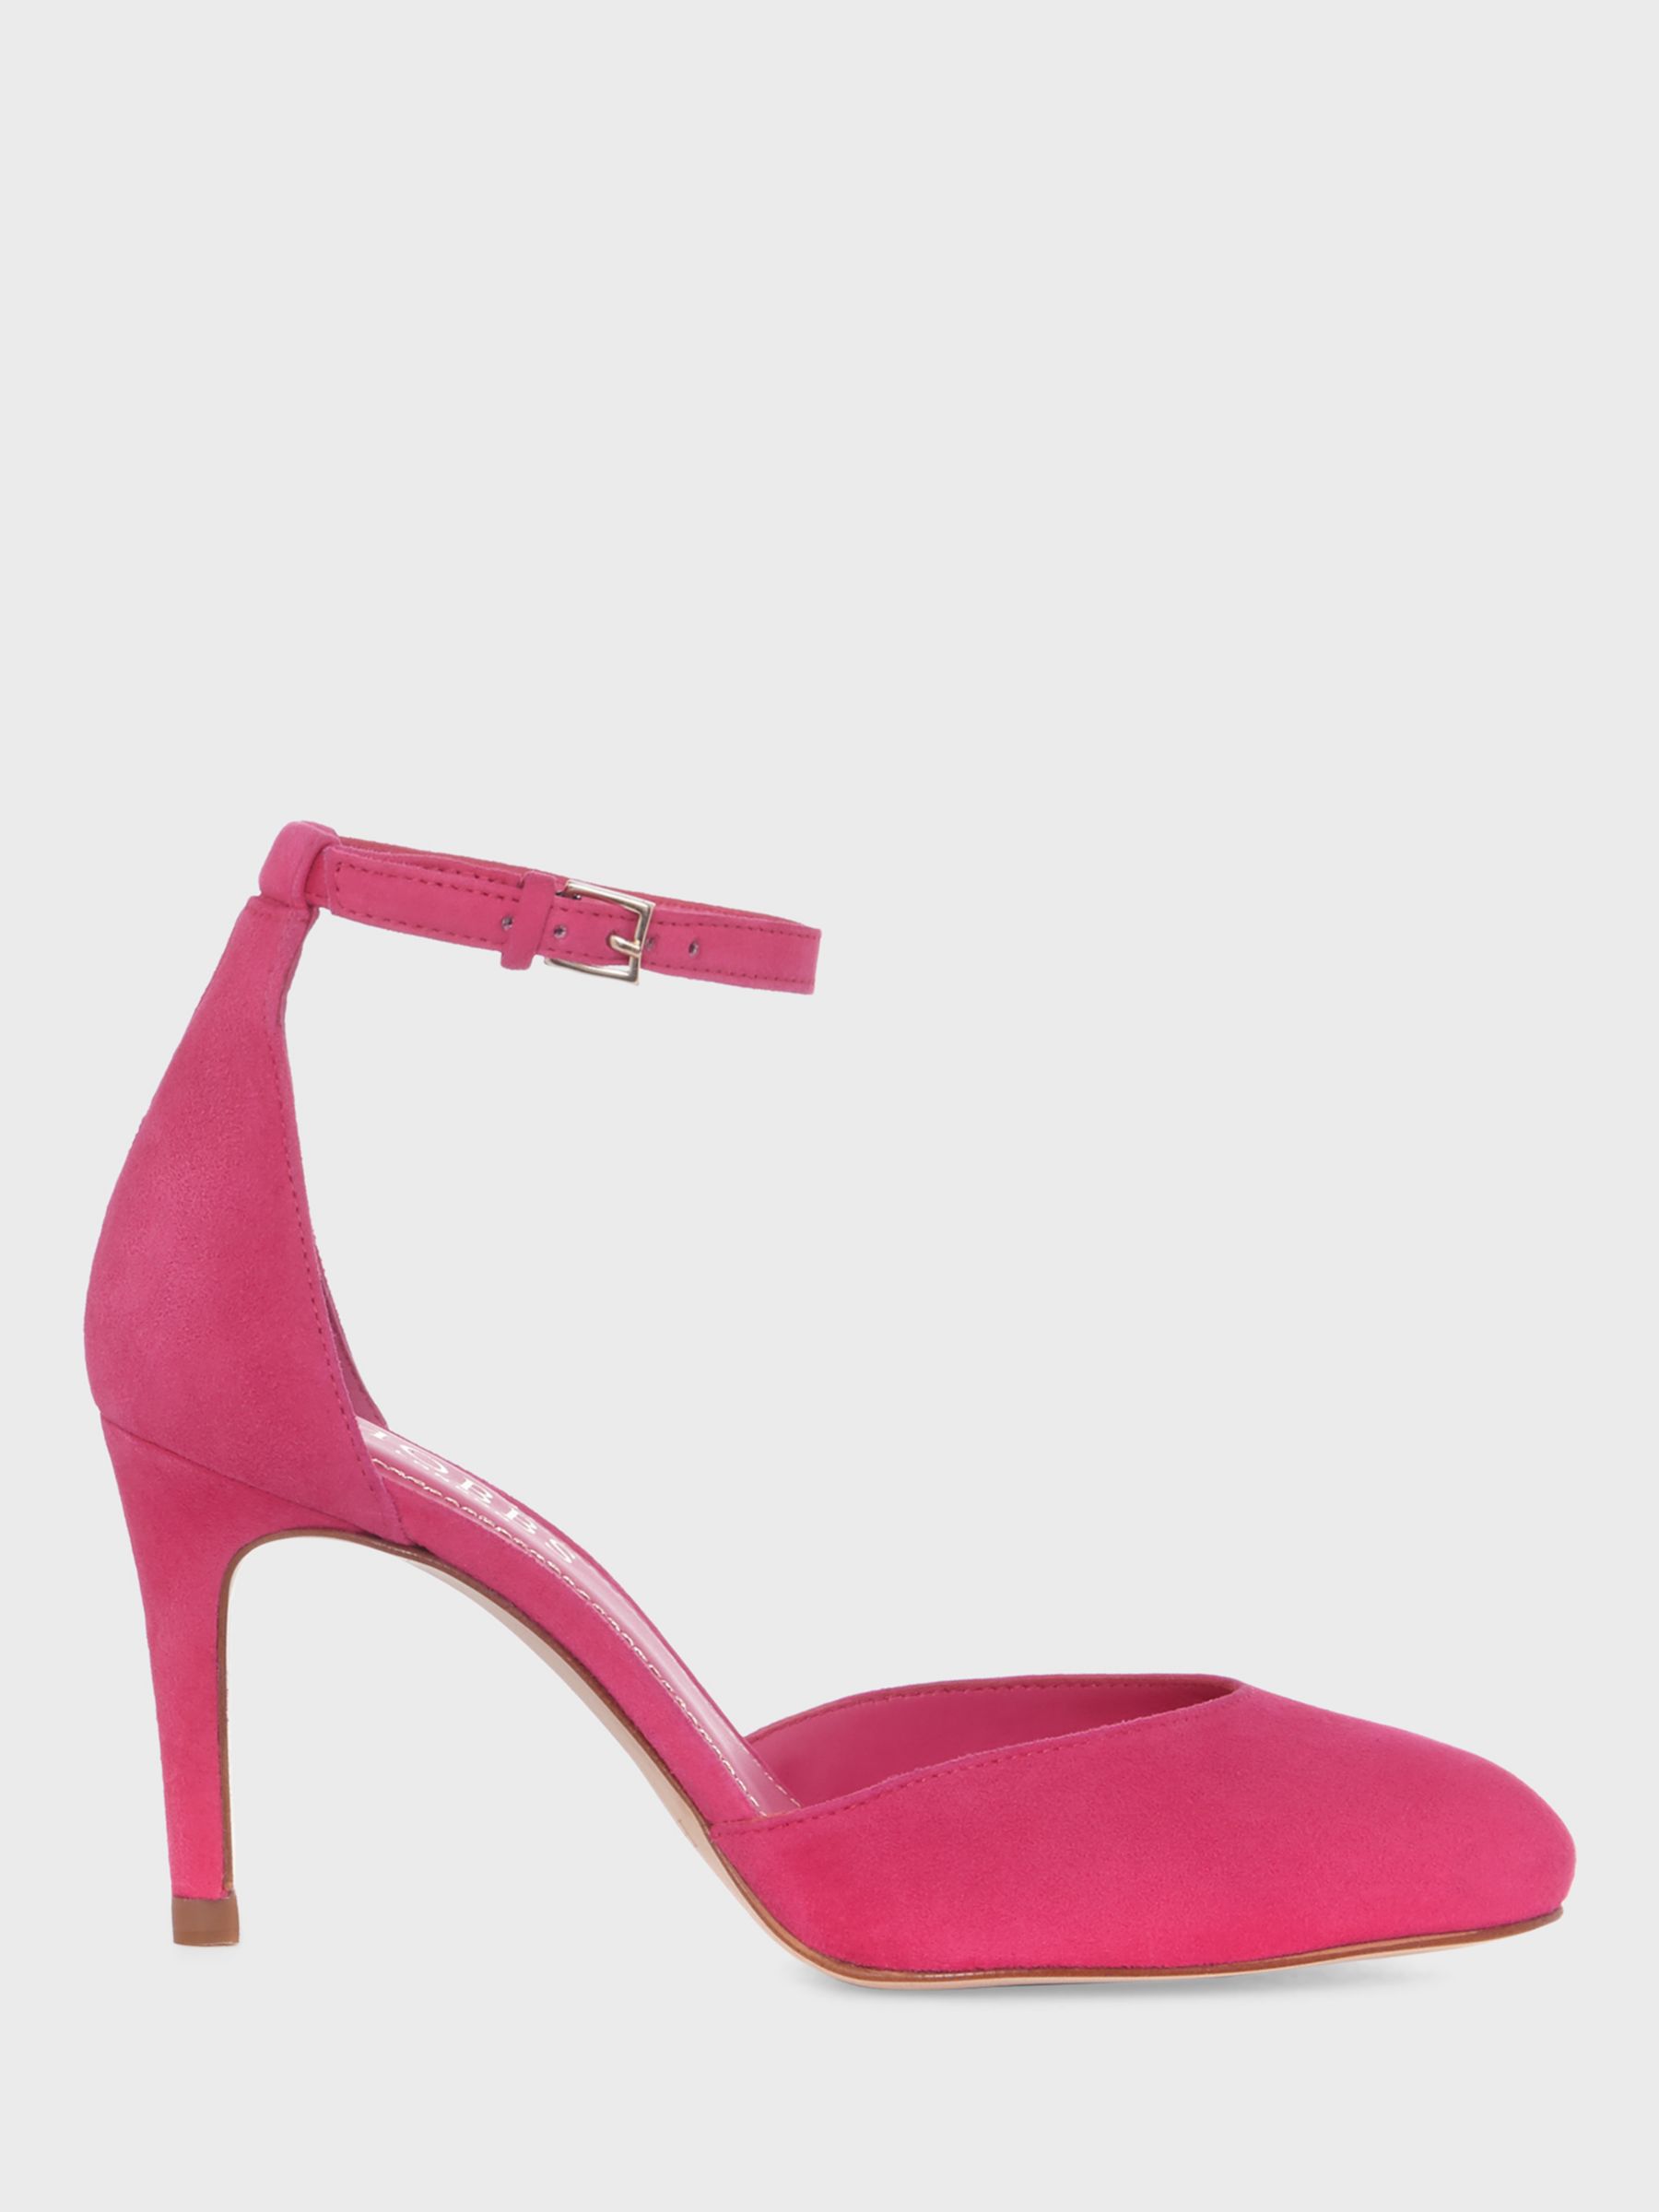 Hobbs Elliya Suede Court Shoes, Bright Pink, 9